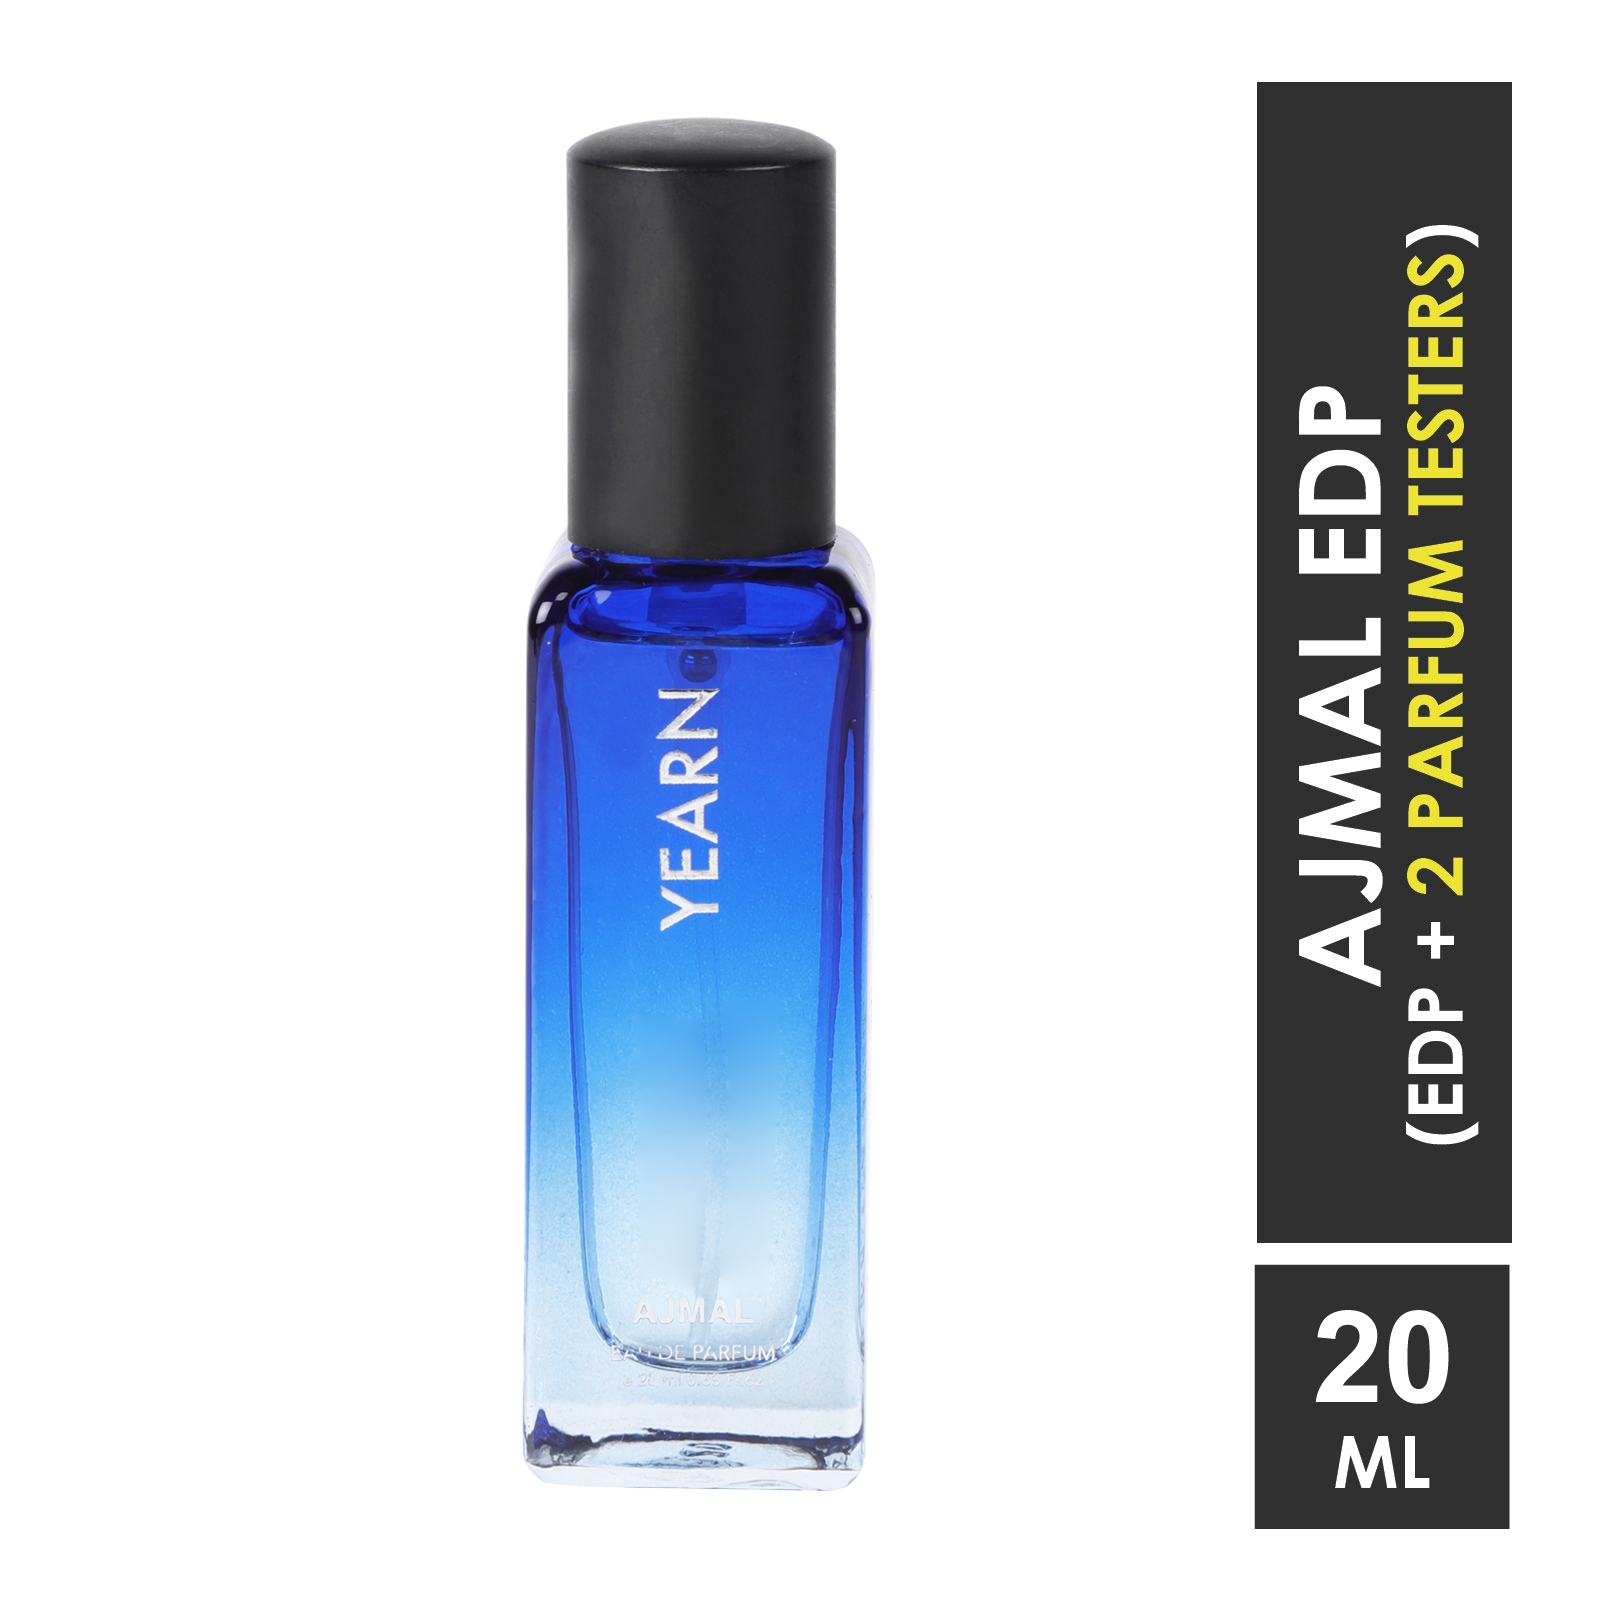 Ajmal | Ajmal Yearn Eau De Parfum Aquatic Perfume 20ML Party Wear for Men + 2 Parfum Testers